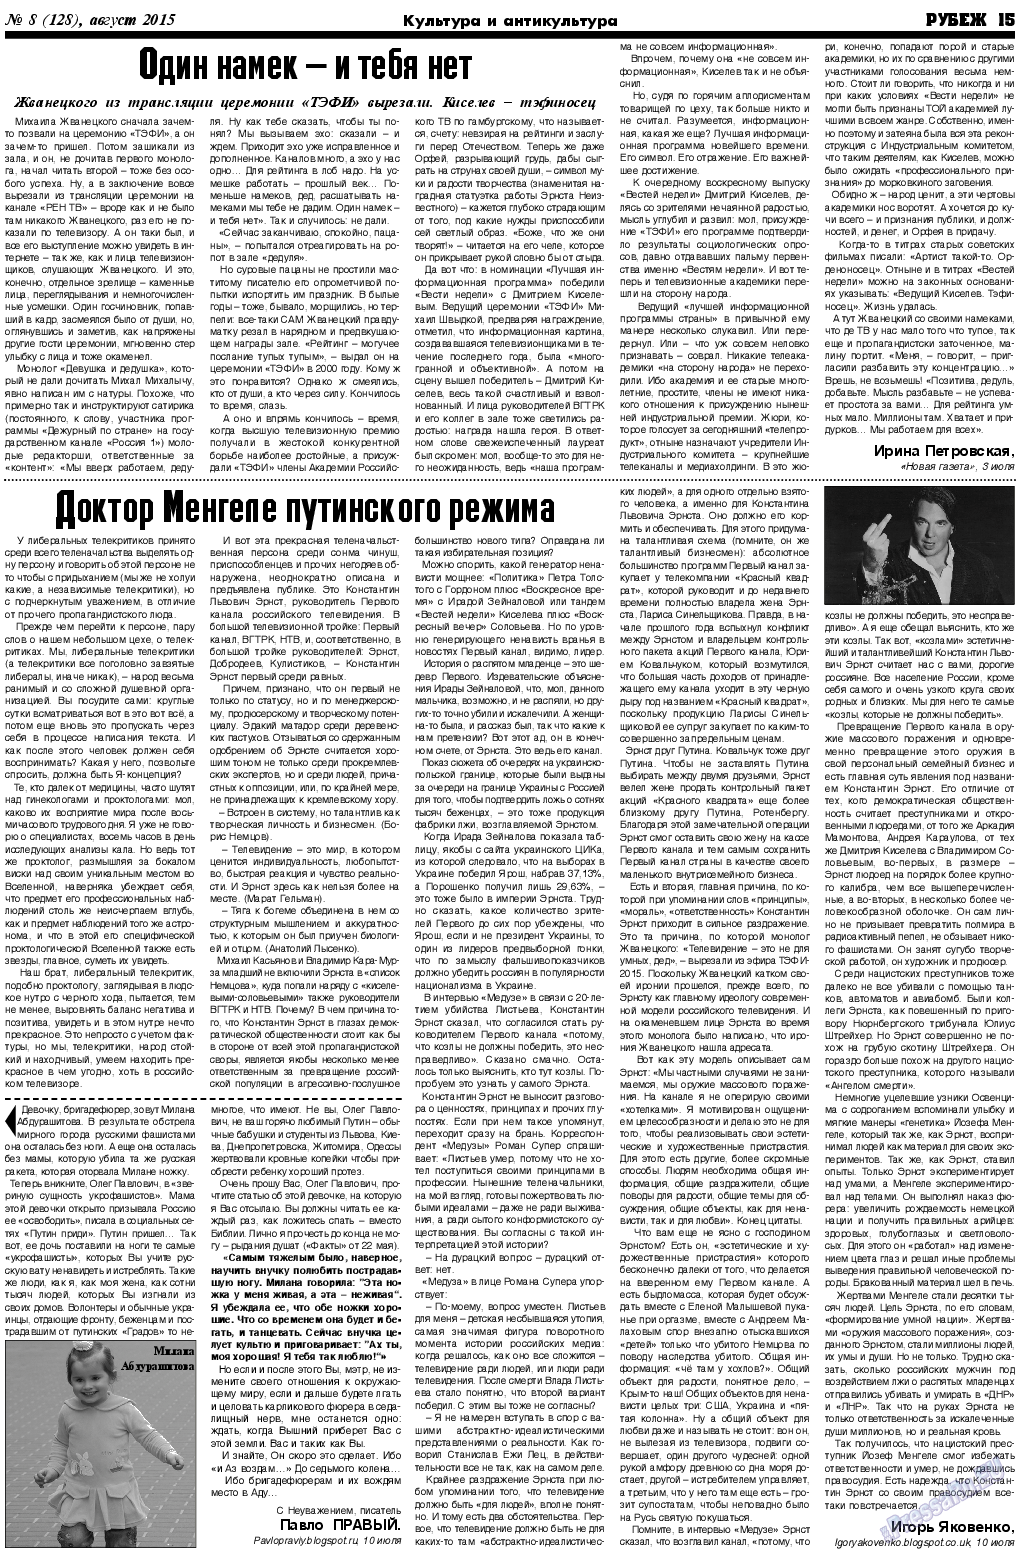 Рубеж, газета. 2015 №8 стр.15